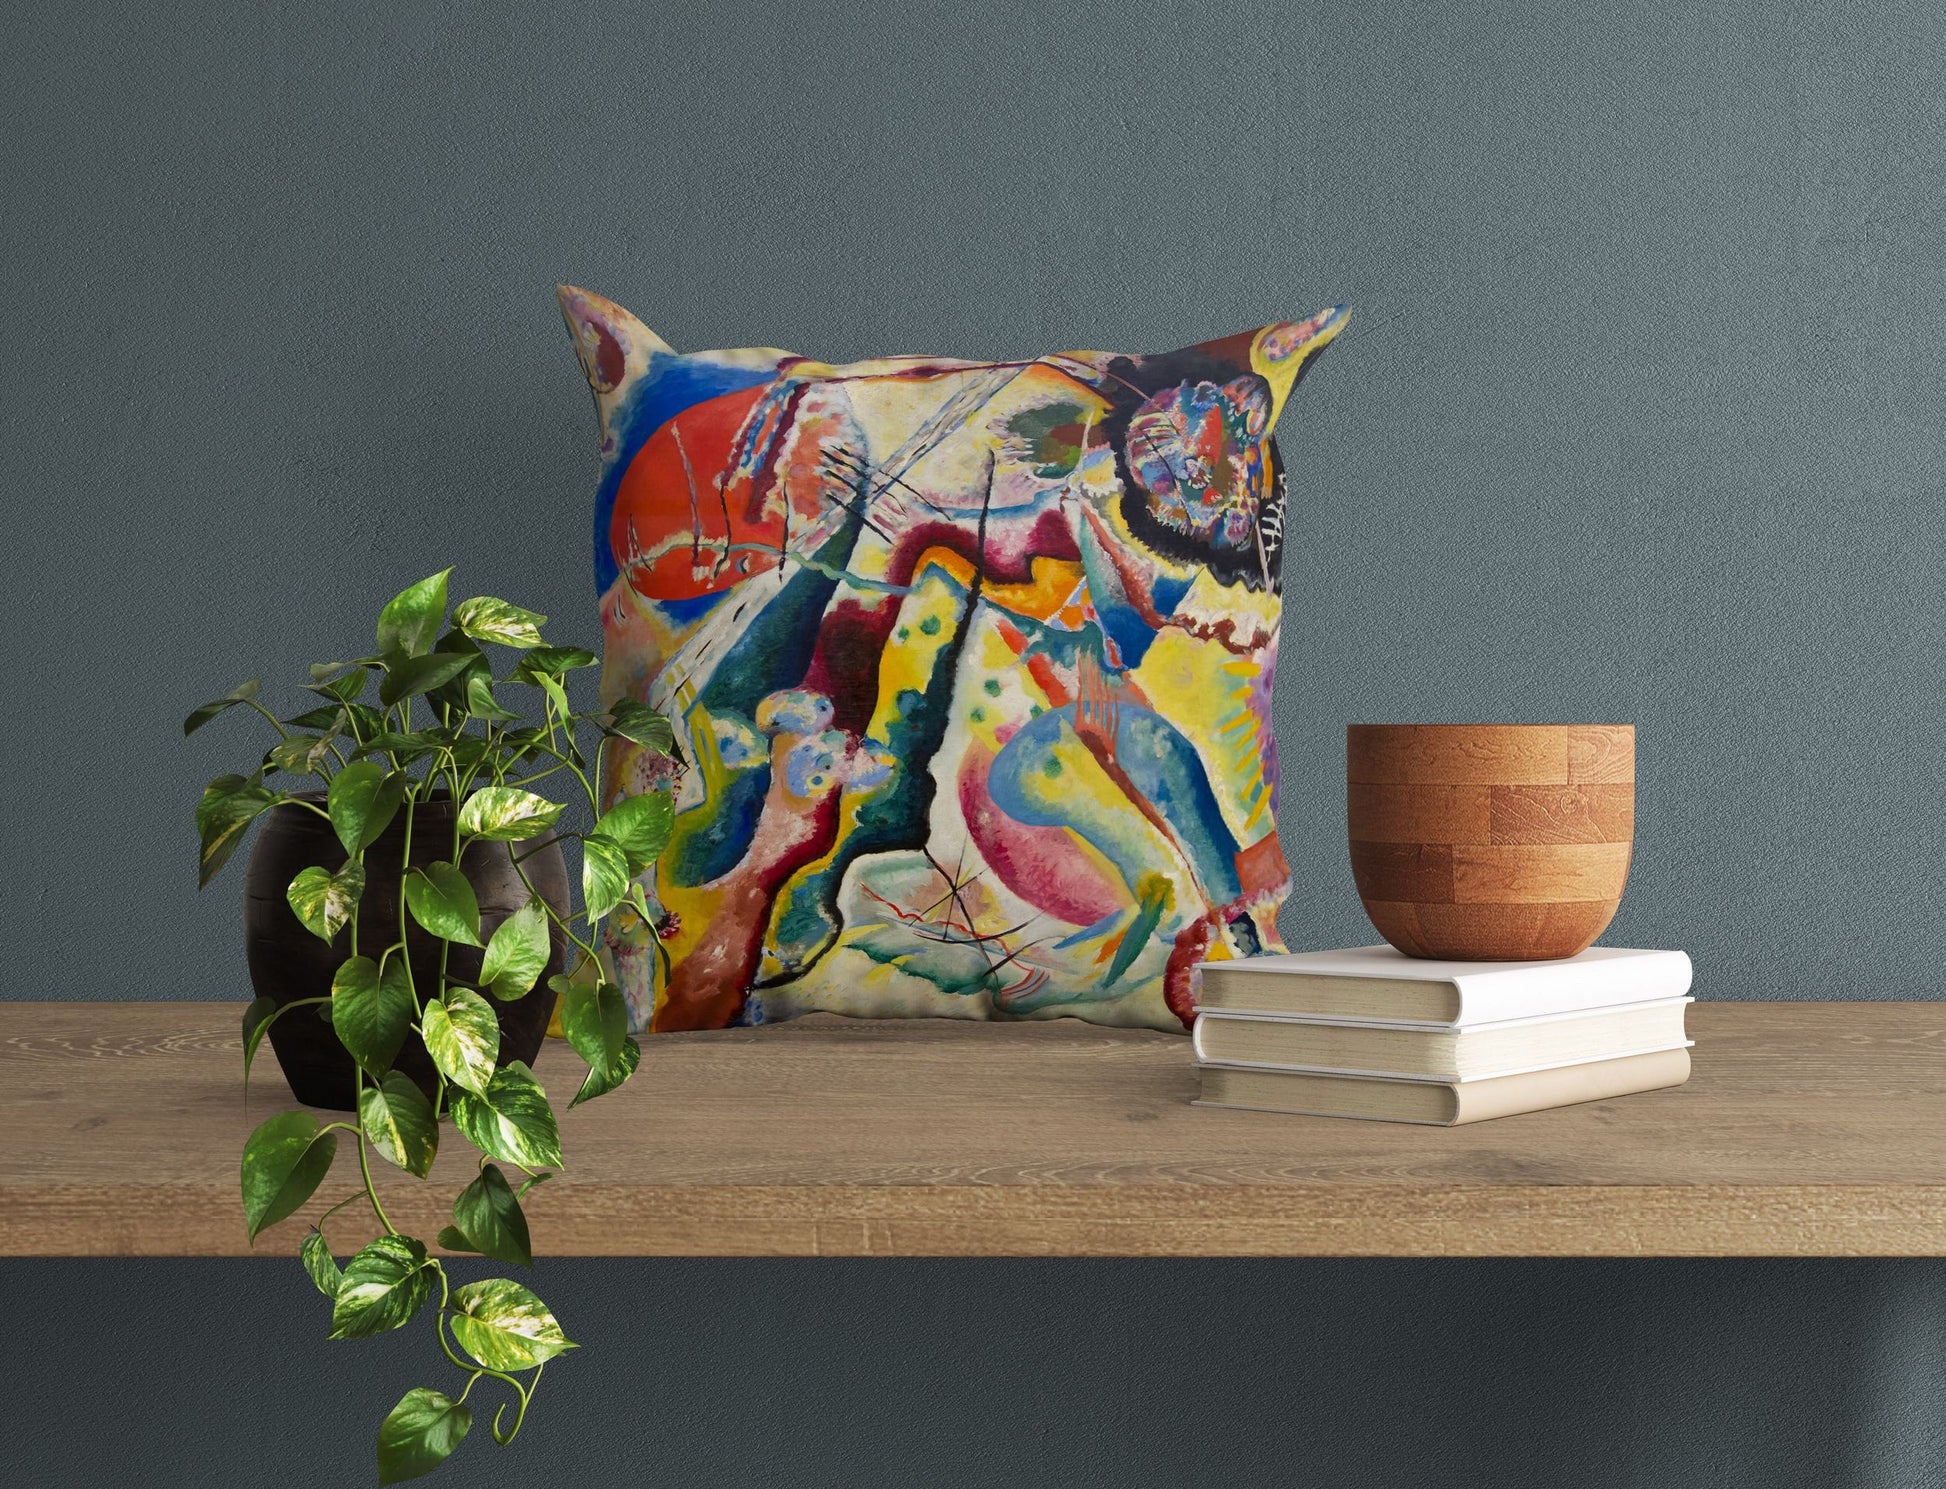 Wassily Kandinsky Abstract Painting, Throw Pillow, Geometric Pillow, Art Pillow, Contemporary Pillow, 18 X 18 Pillow Covers